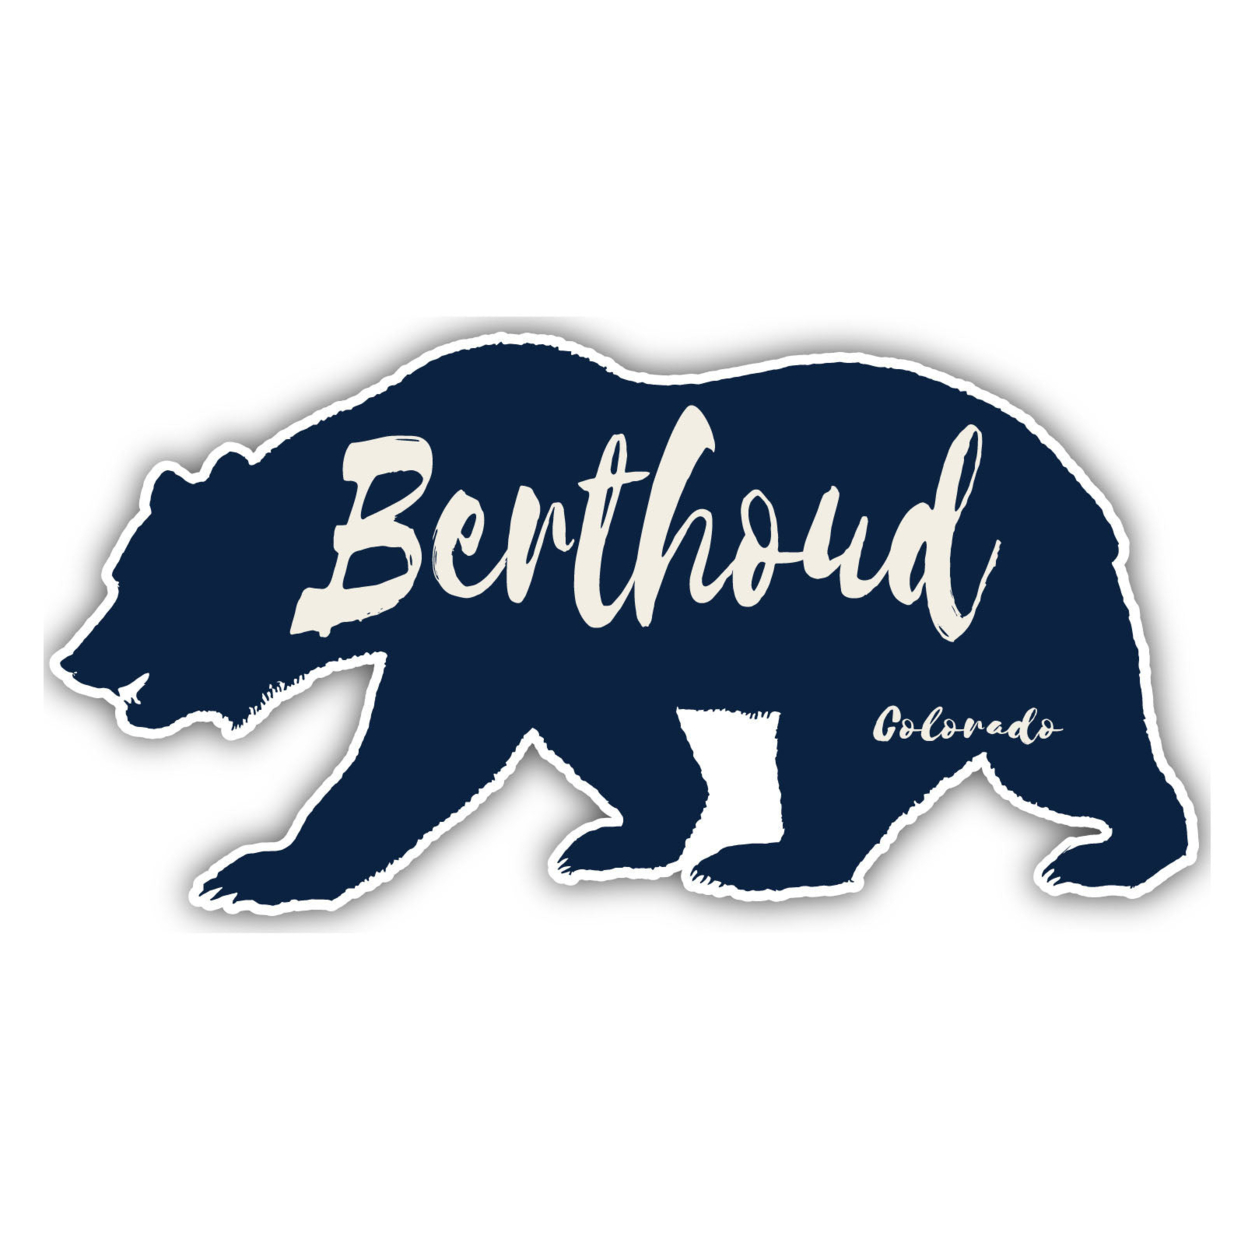 Berthoud Colorado Souvenir Decorative Stickers (Choose Theme And Size) - Single Unit, 4-Inch, Tent